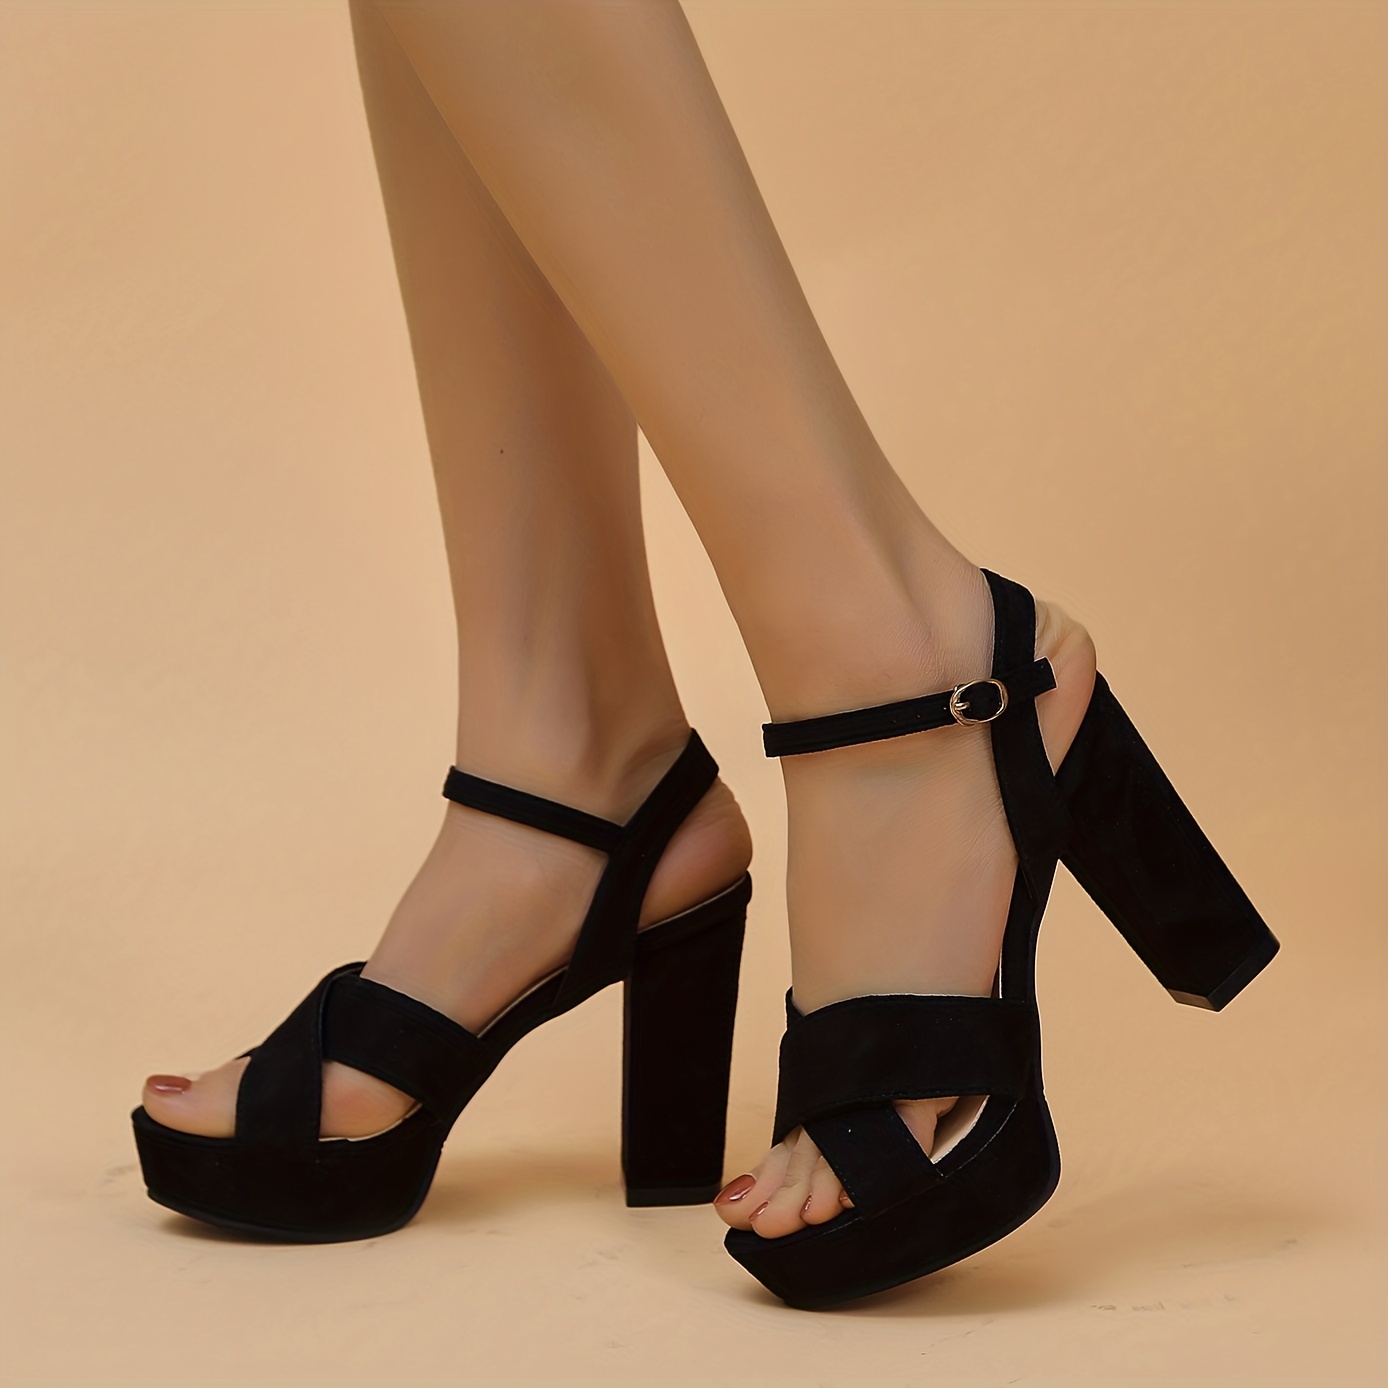 Women's Platform Block High Heels Sandals, Black Cross Strap Ankle Buckle  Strap Open Toe Pumps, Party & Dress Shoes